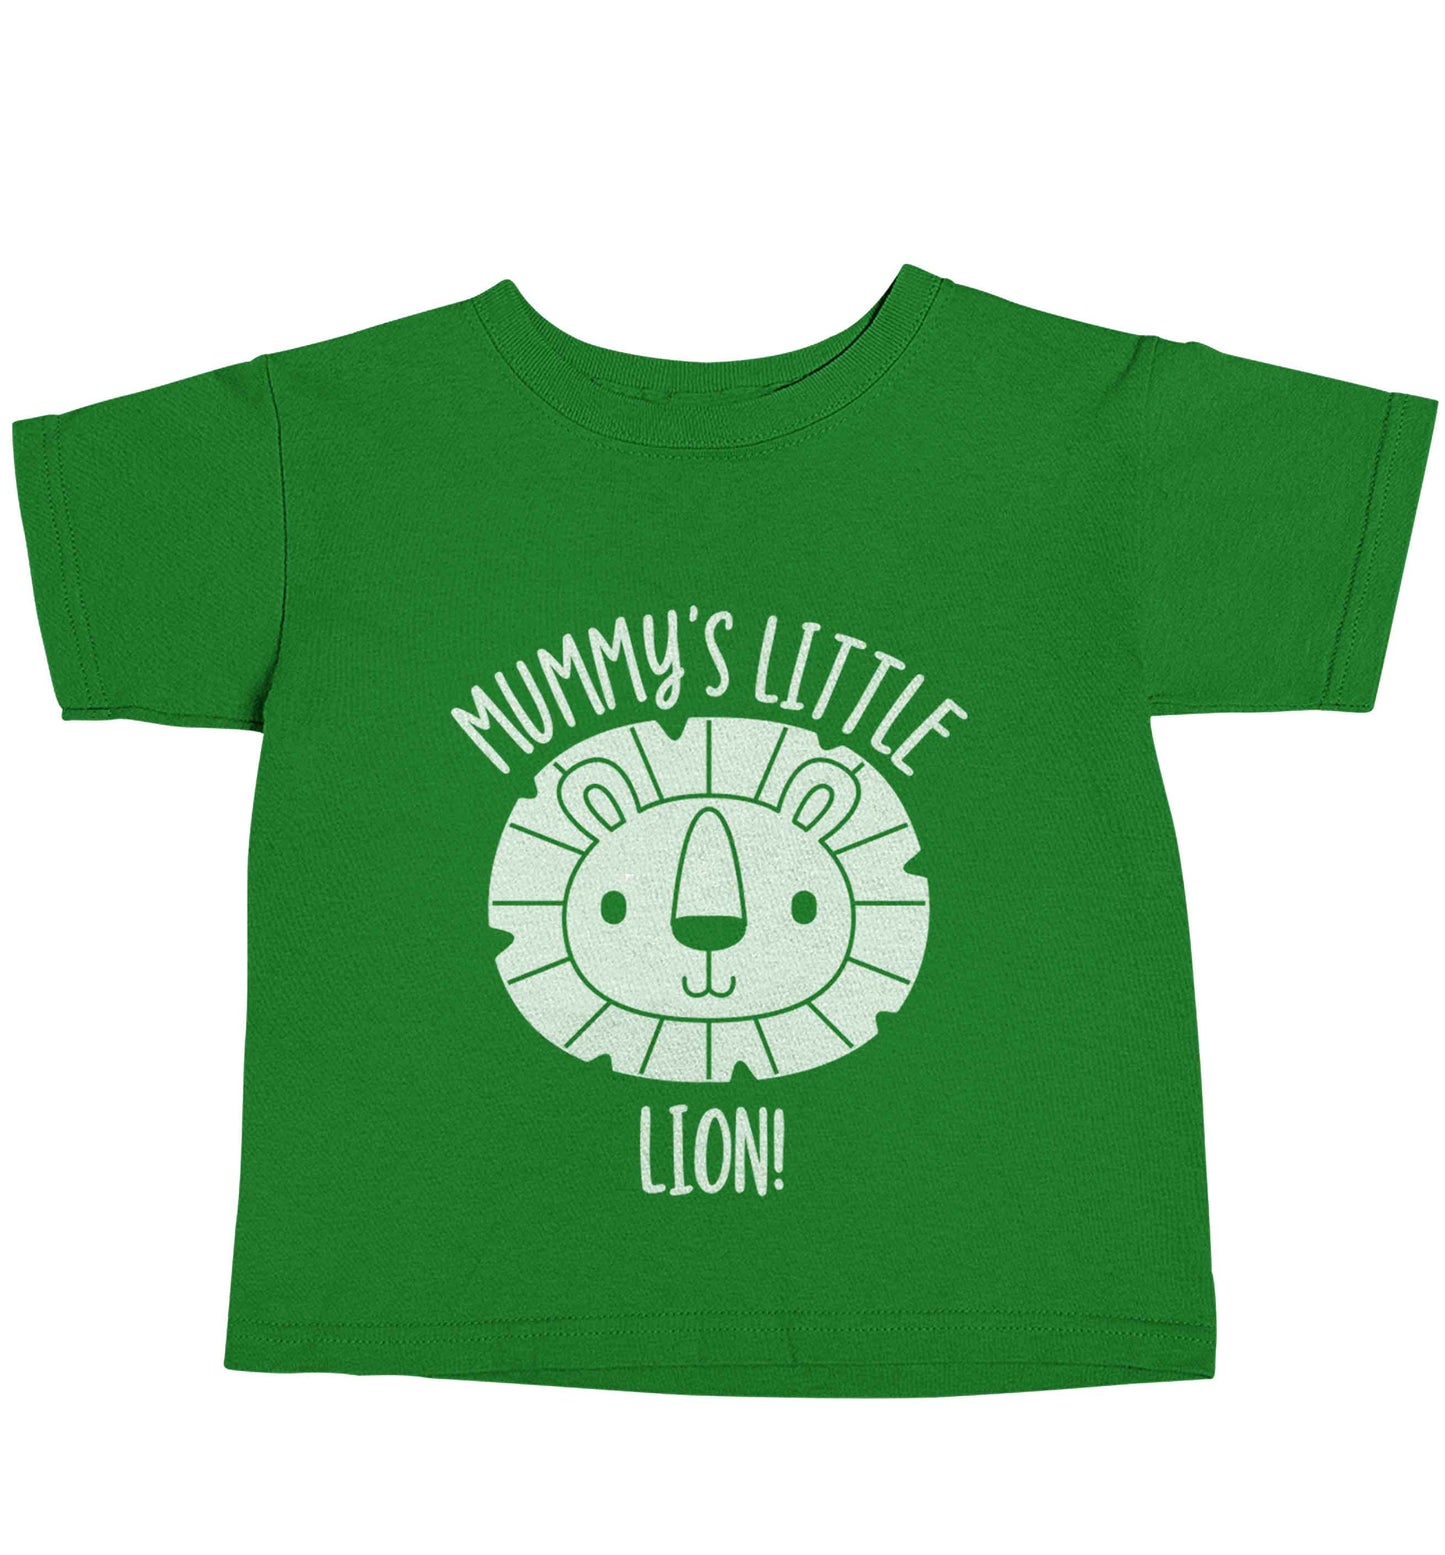 Mummy's little lion green baby toddler Tshirt 2 Years